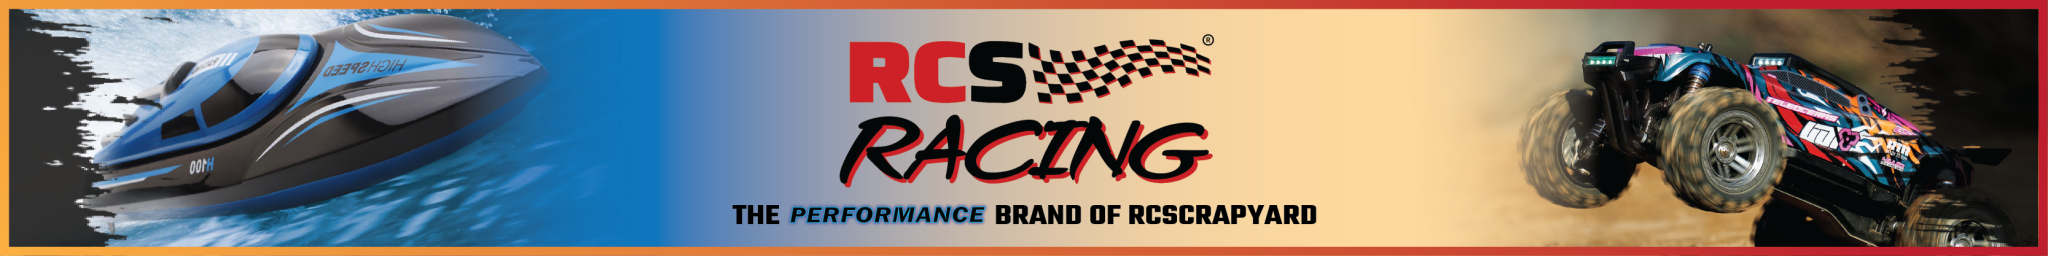 RCS-Racing Banner.png